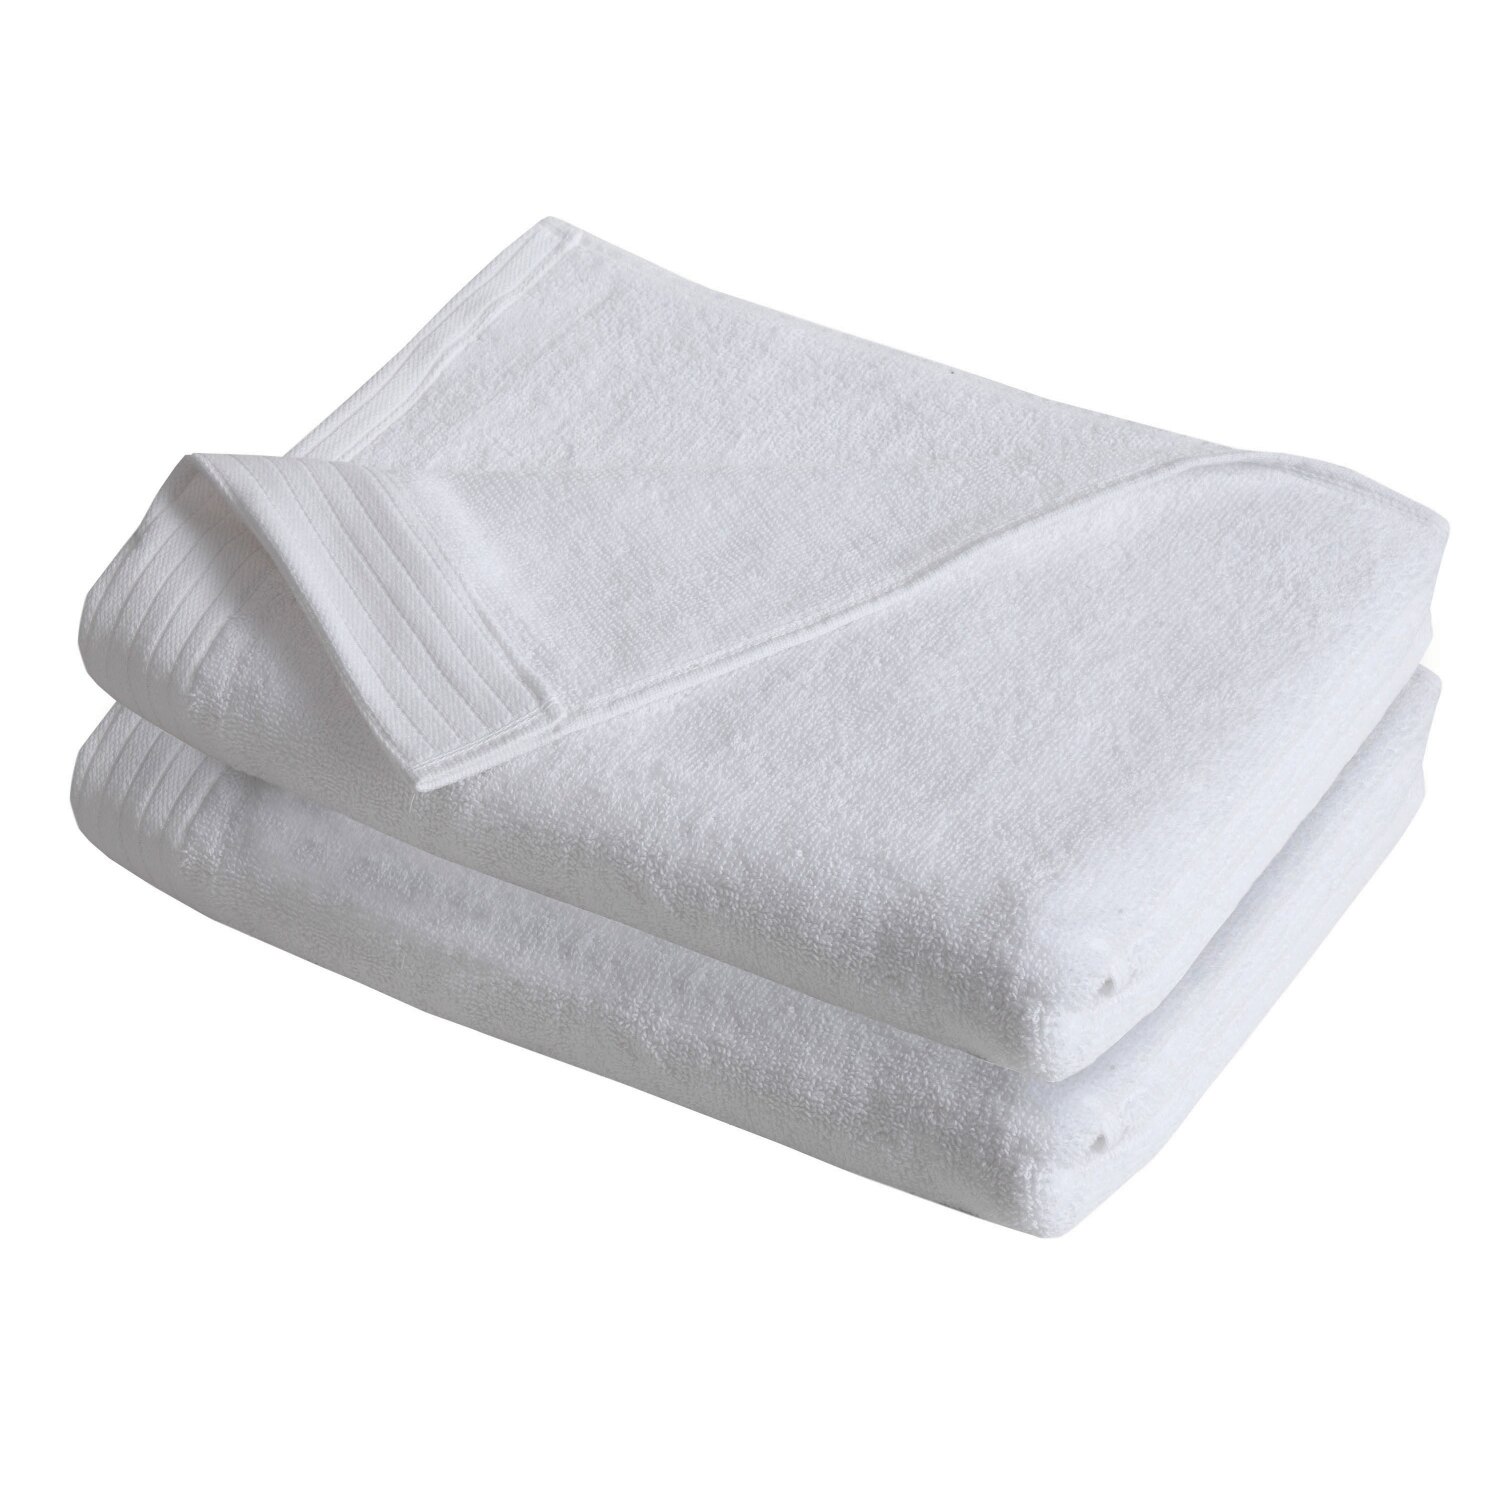 IZOD Everyday White 4 Pack Bath Towels